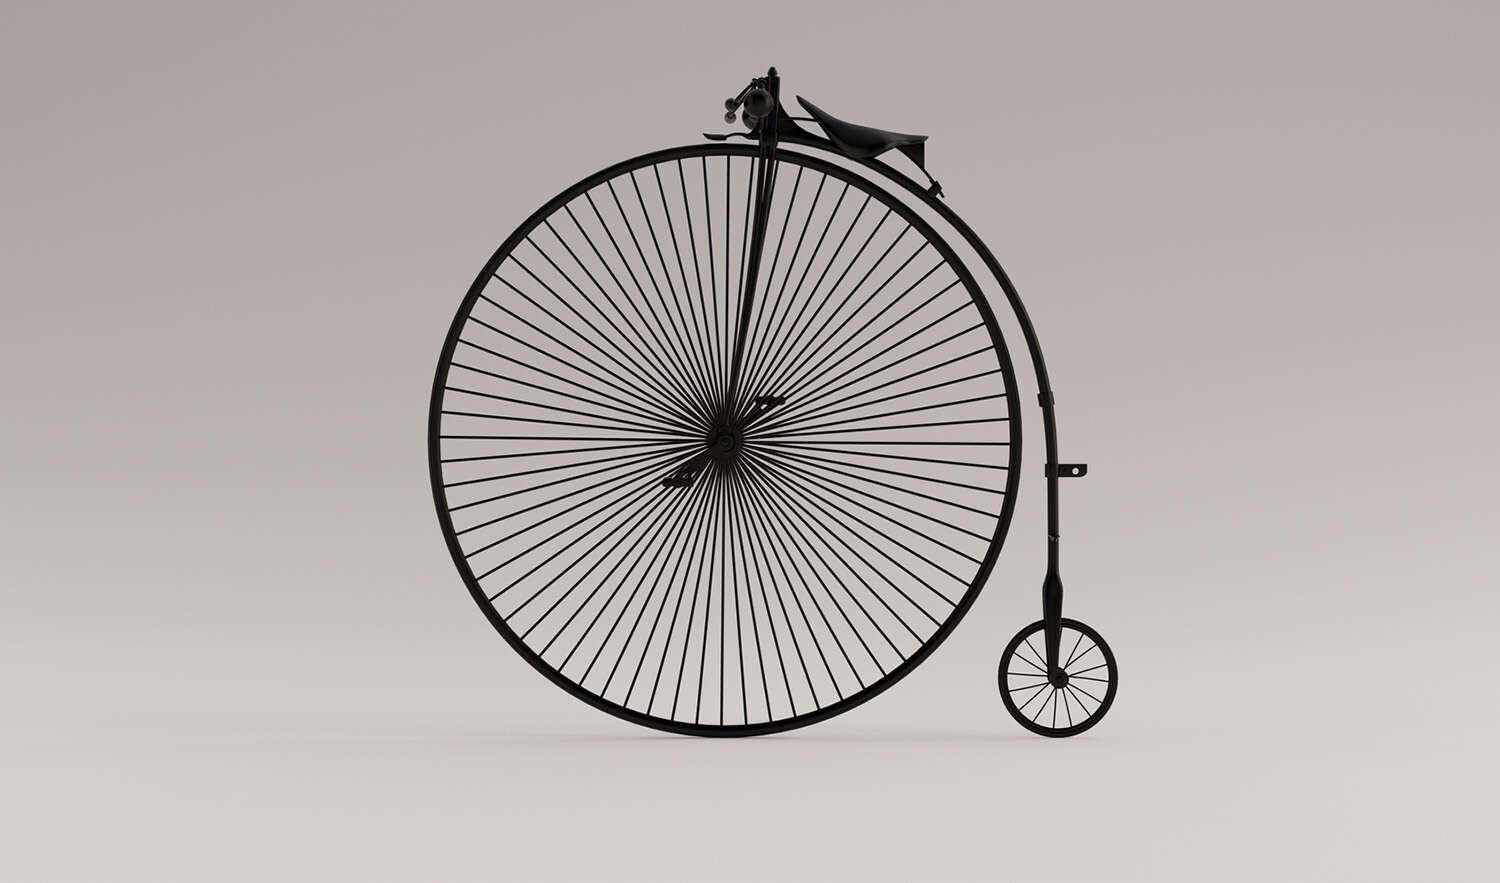 ilk pedallı bisiklet